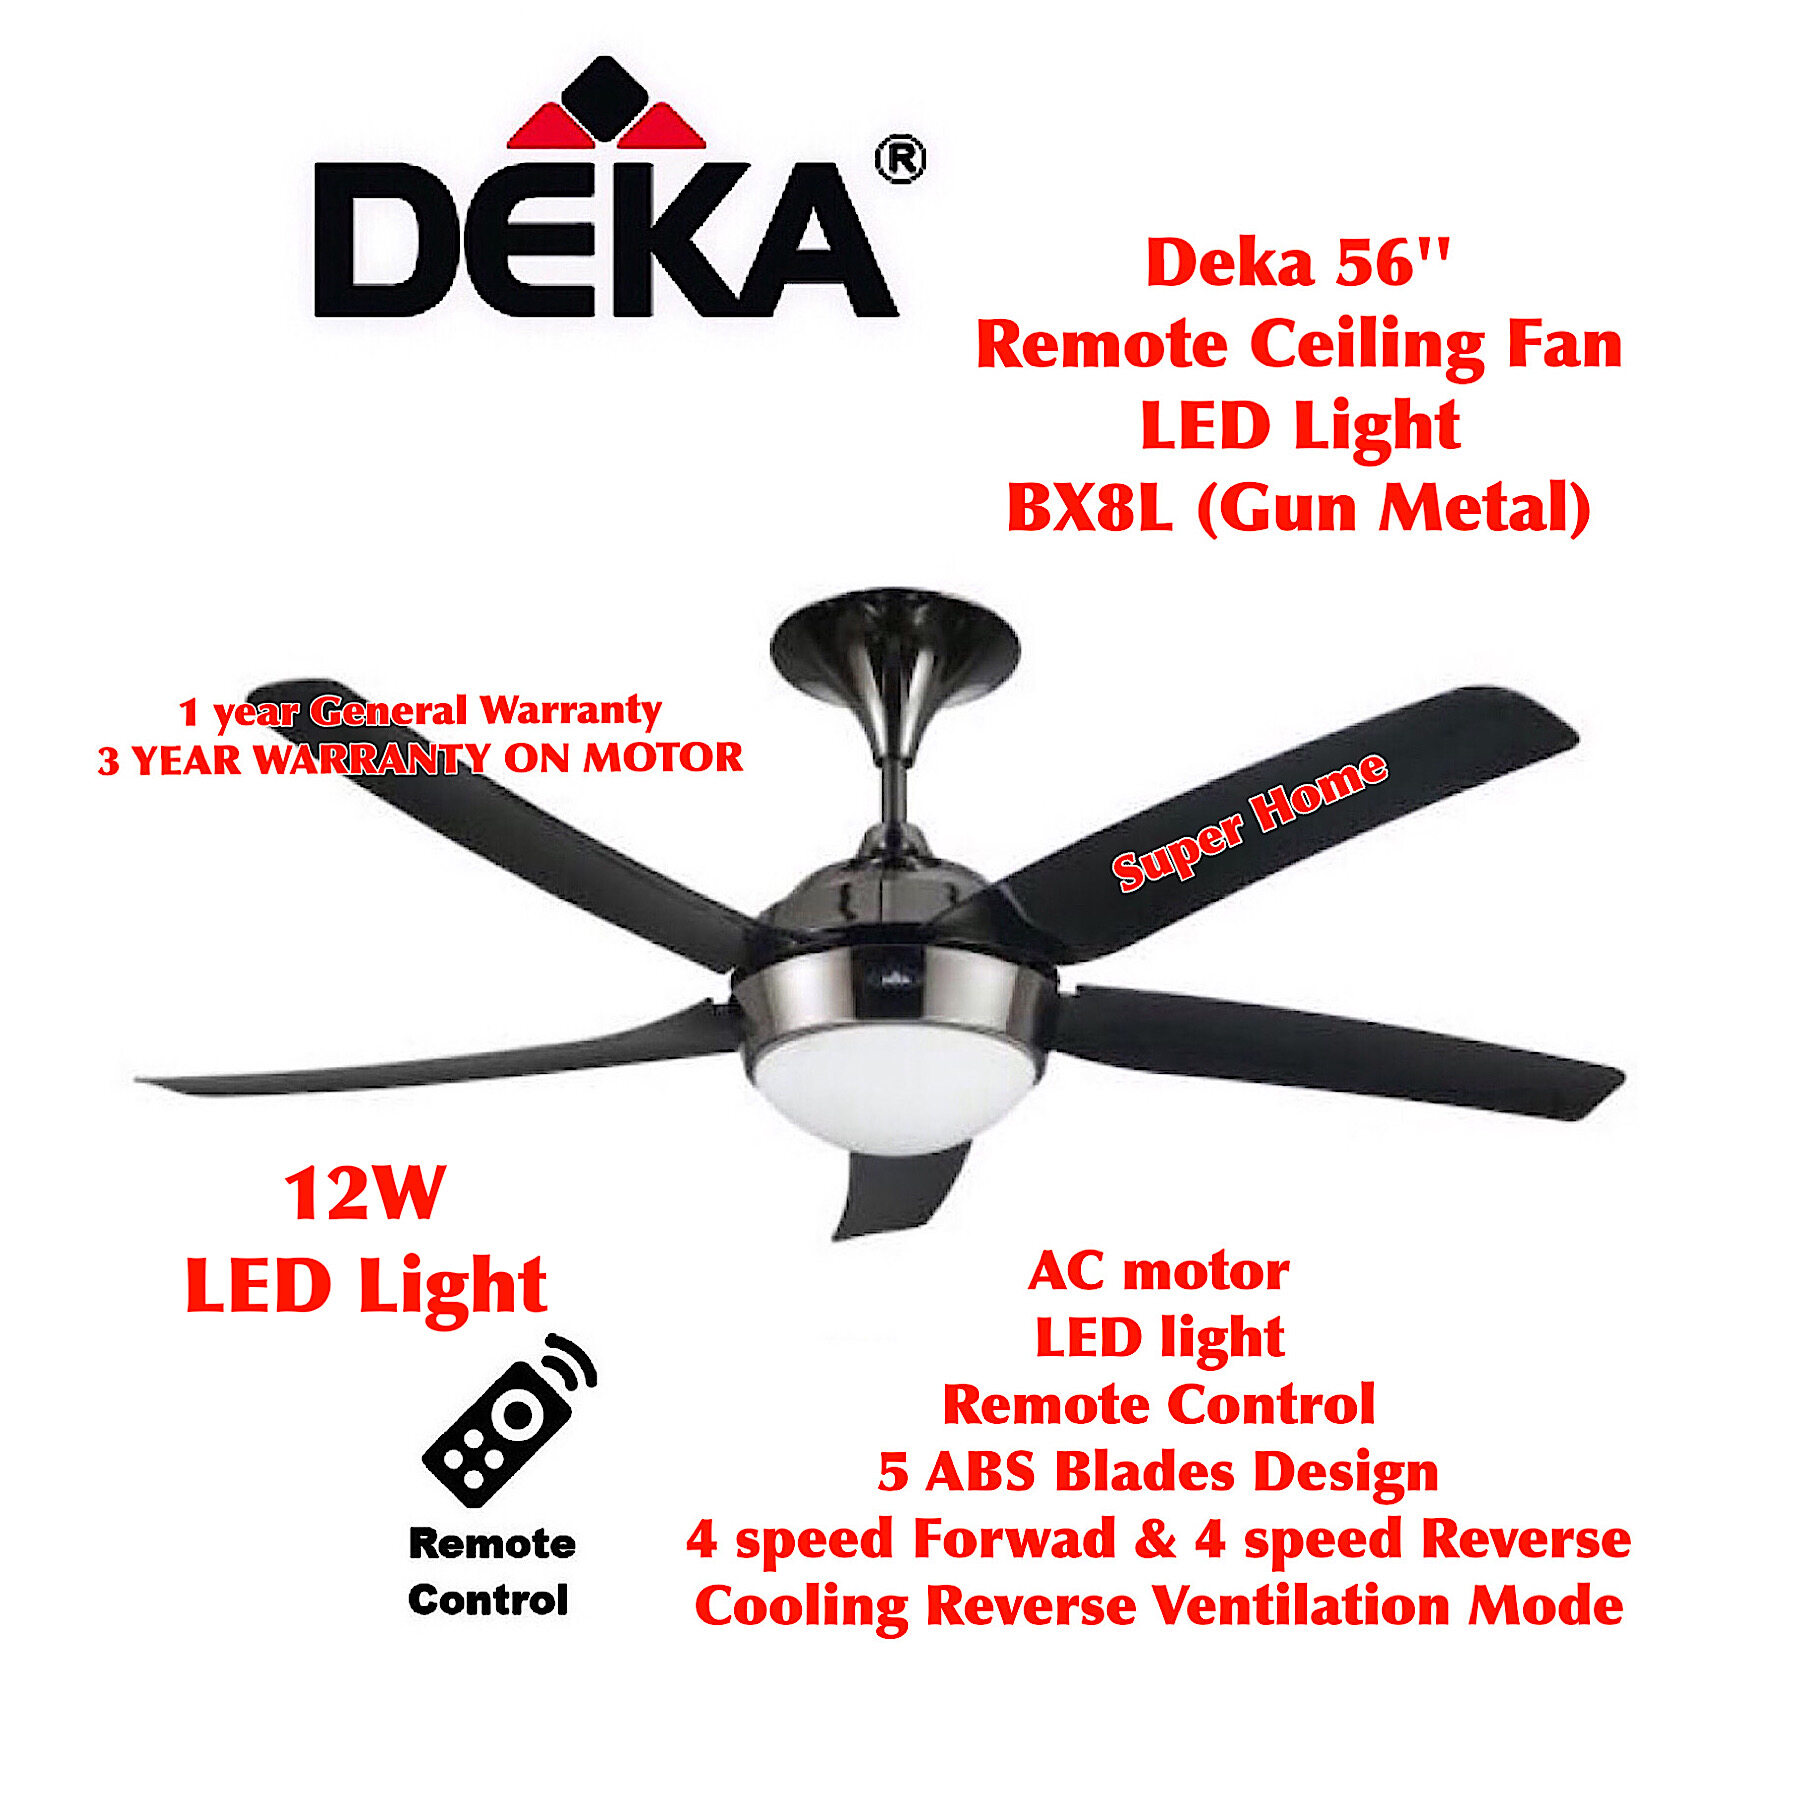 Deka 56 inch Remote Control Ceiling Fan with LED Ligh(12W) BX8L (Gun Metal) - 4 speed Forwad & 4 speed Reverse